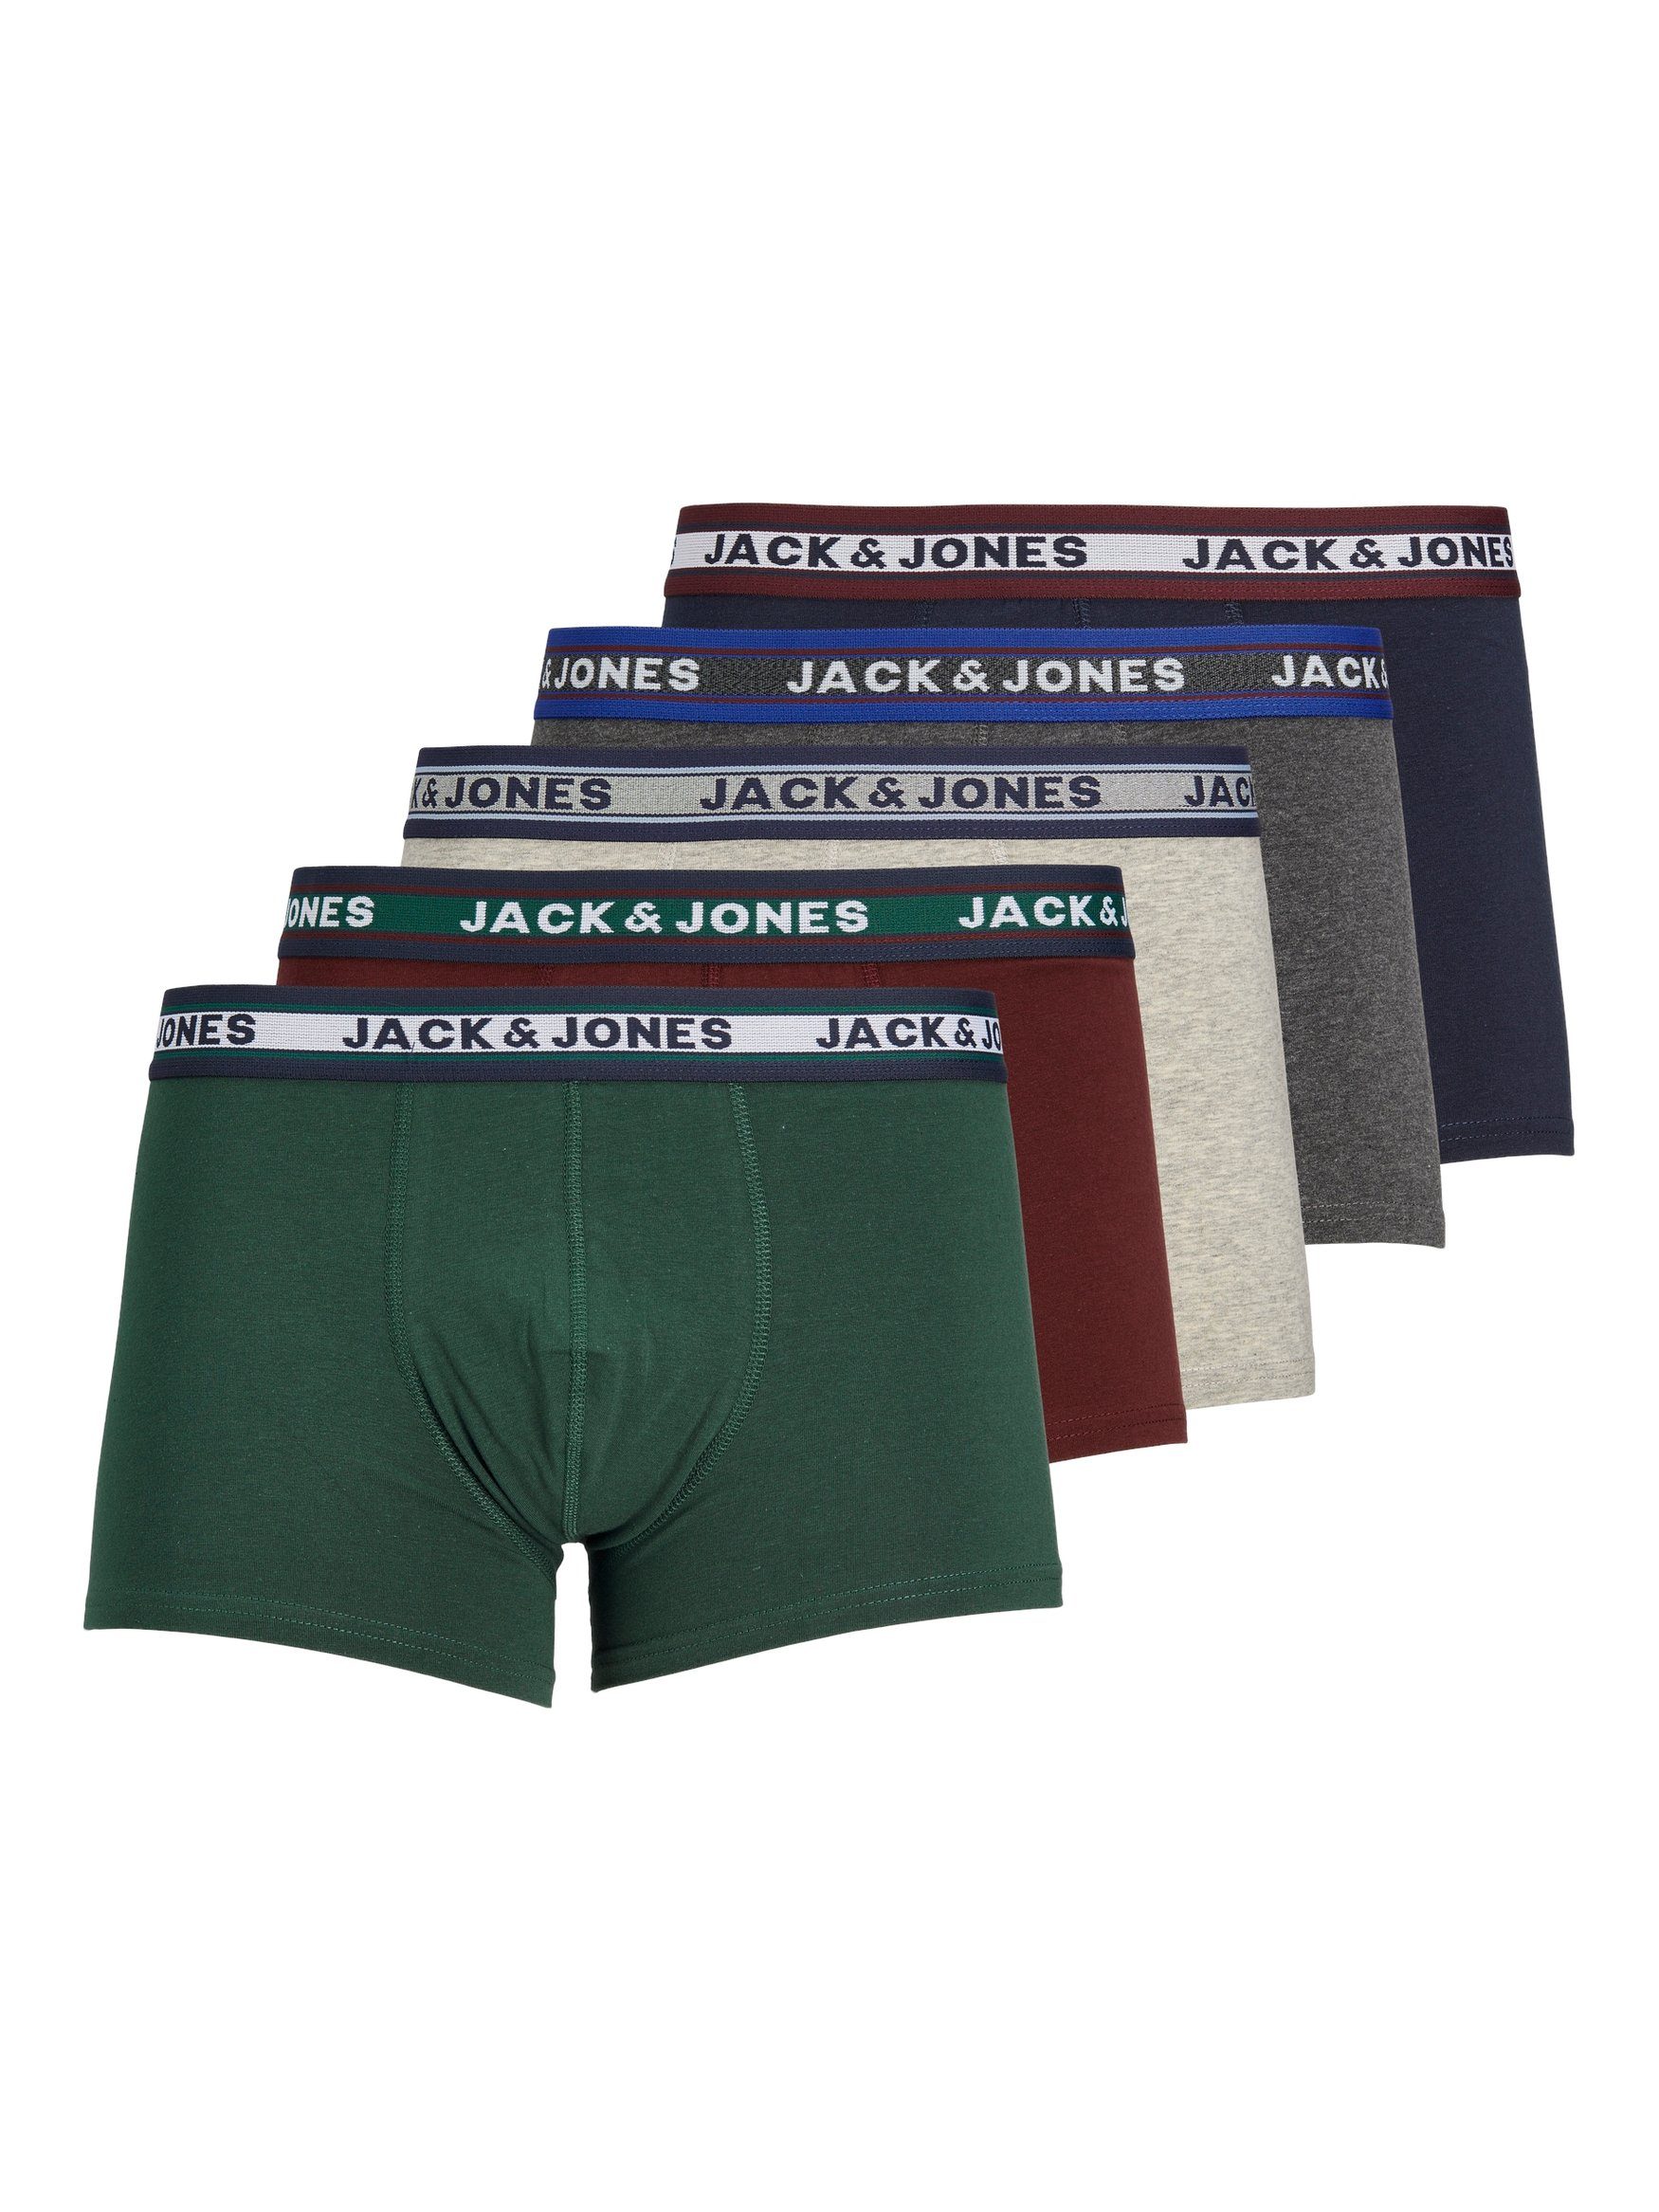 Jack & Jones Boxershorts Boxershorts 5er-Pack Basic Set Trunks Unterhosen JACOLIVER (5-St) 6820 in Mehrfarbig DGM/sea moss/port royale/navy blazer/LGM